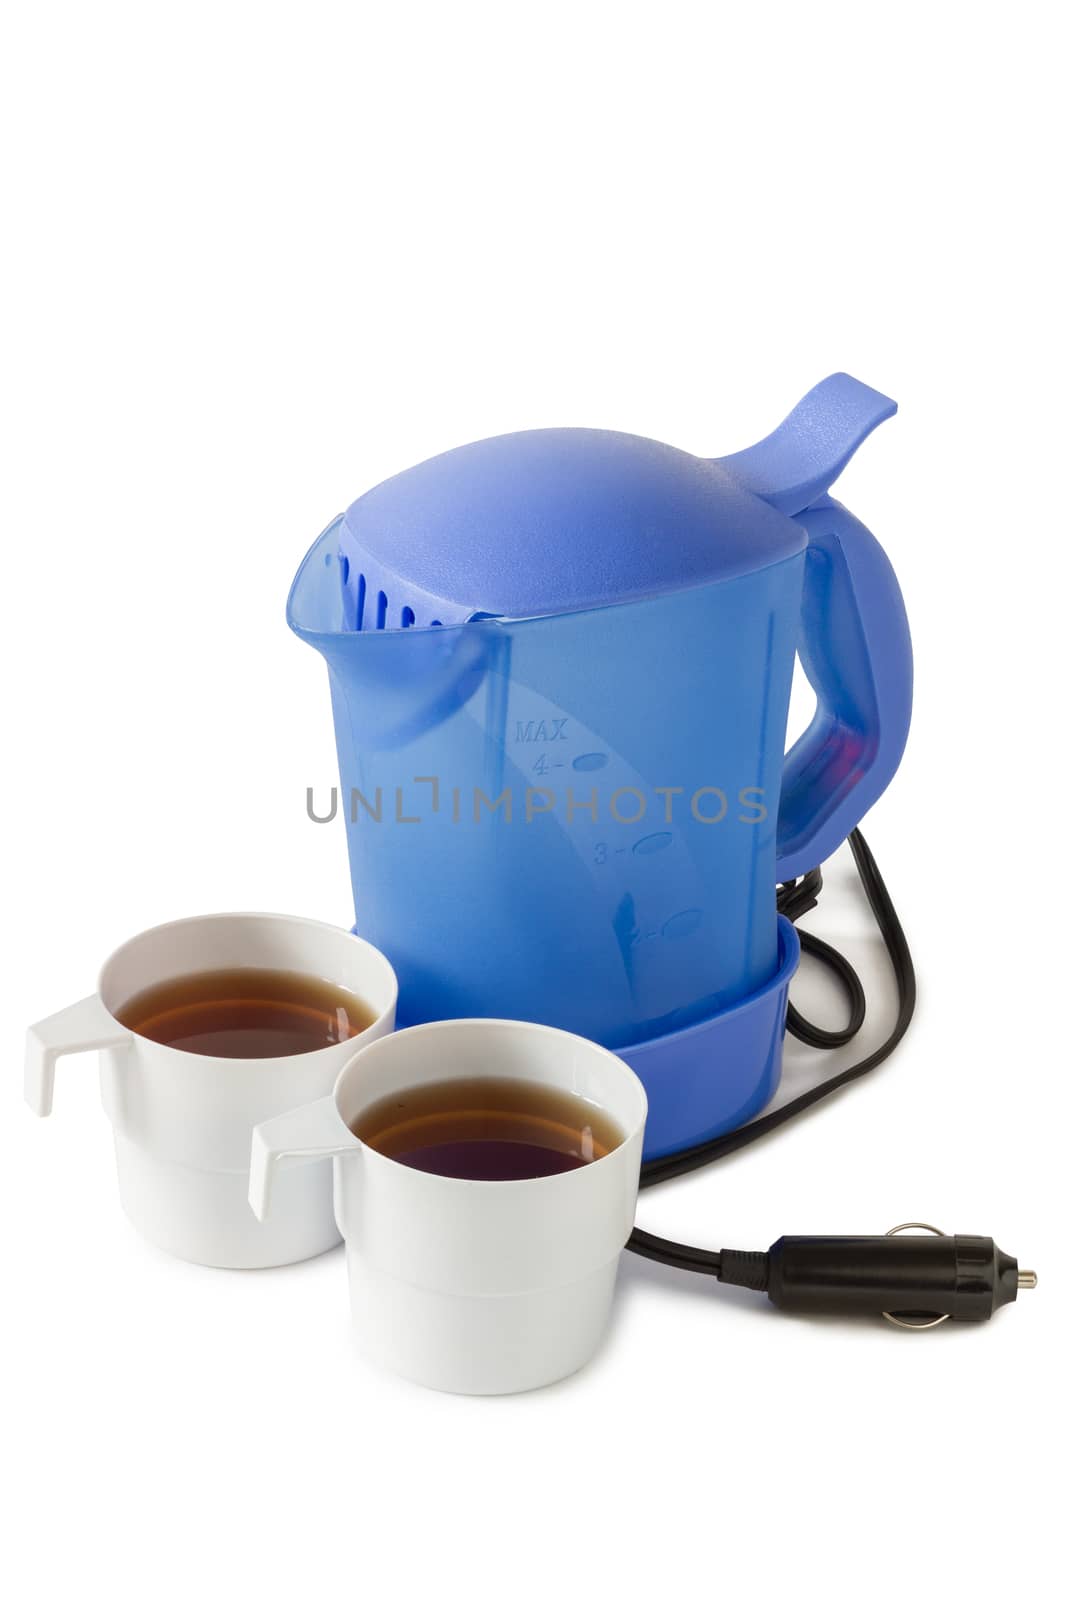 Electric teapot by Ohotnik